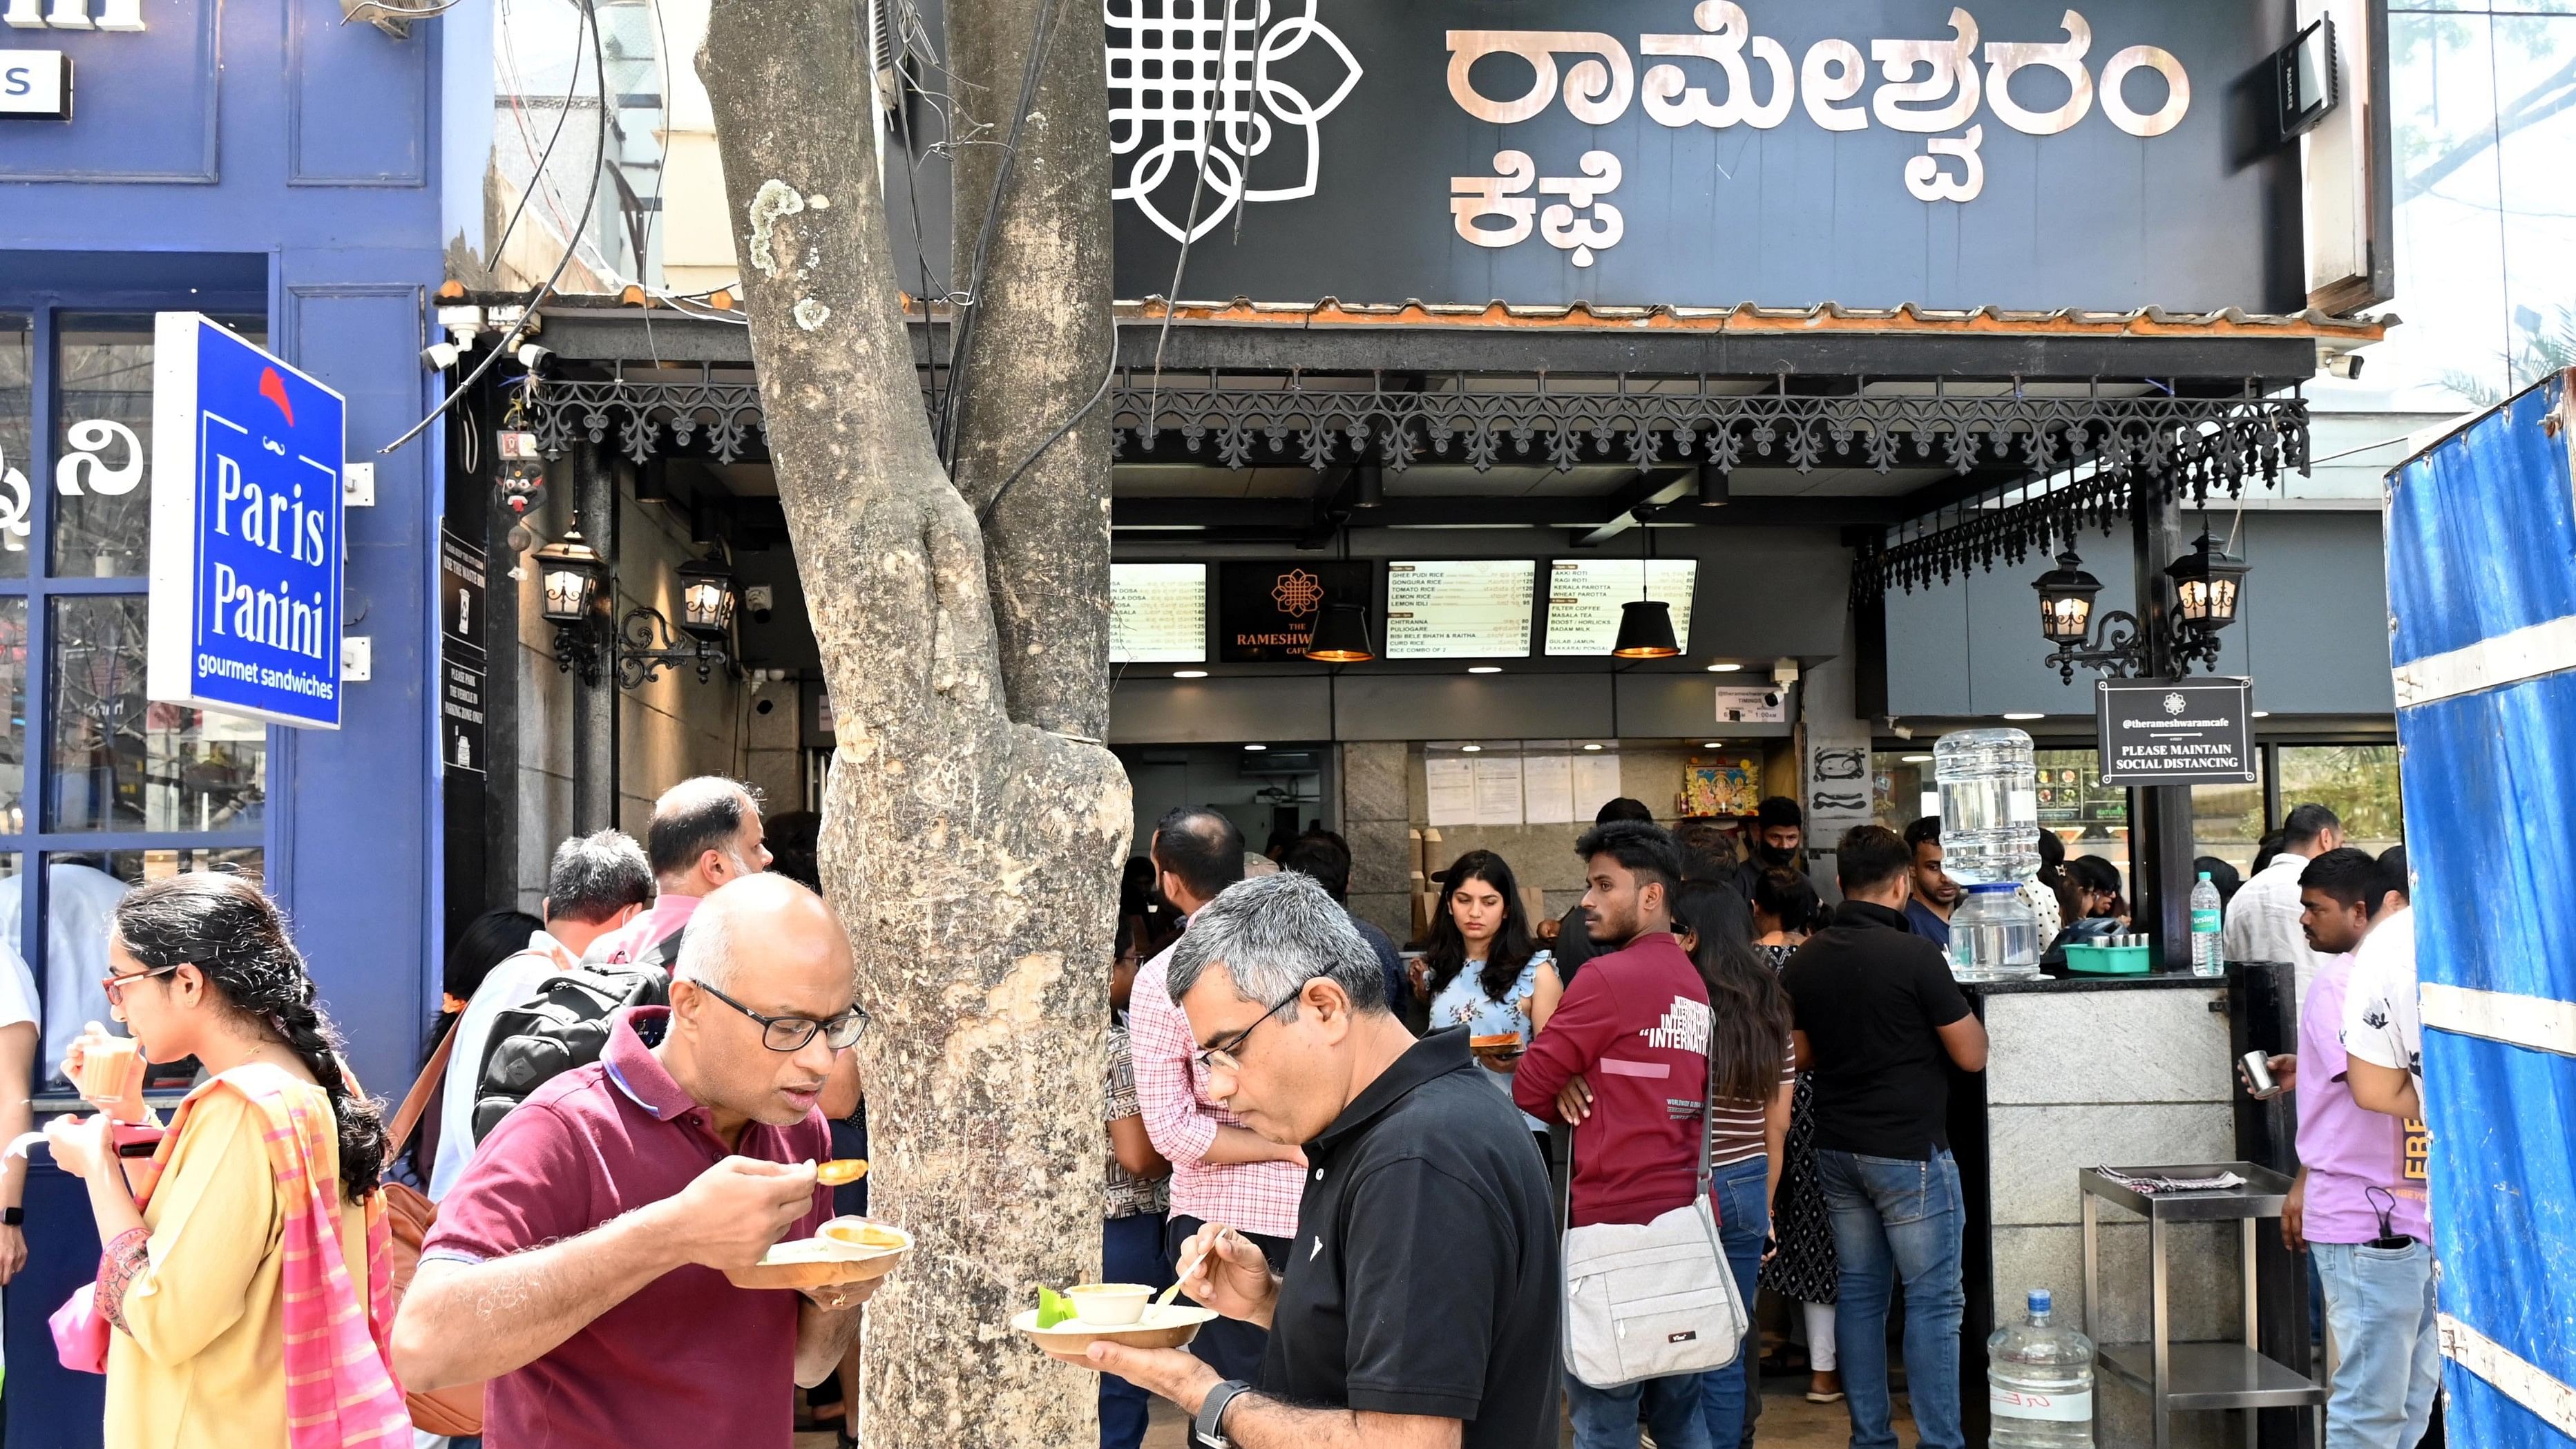 The Indiranagar branch of the cafe. DH PHOTO/BK Janardhan